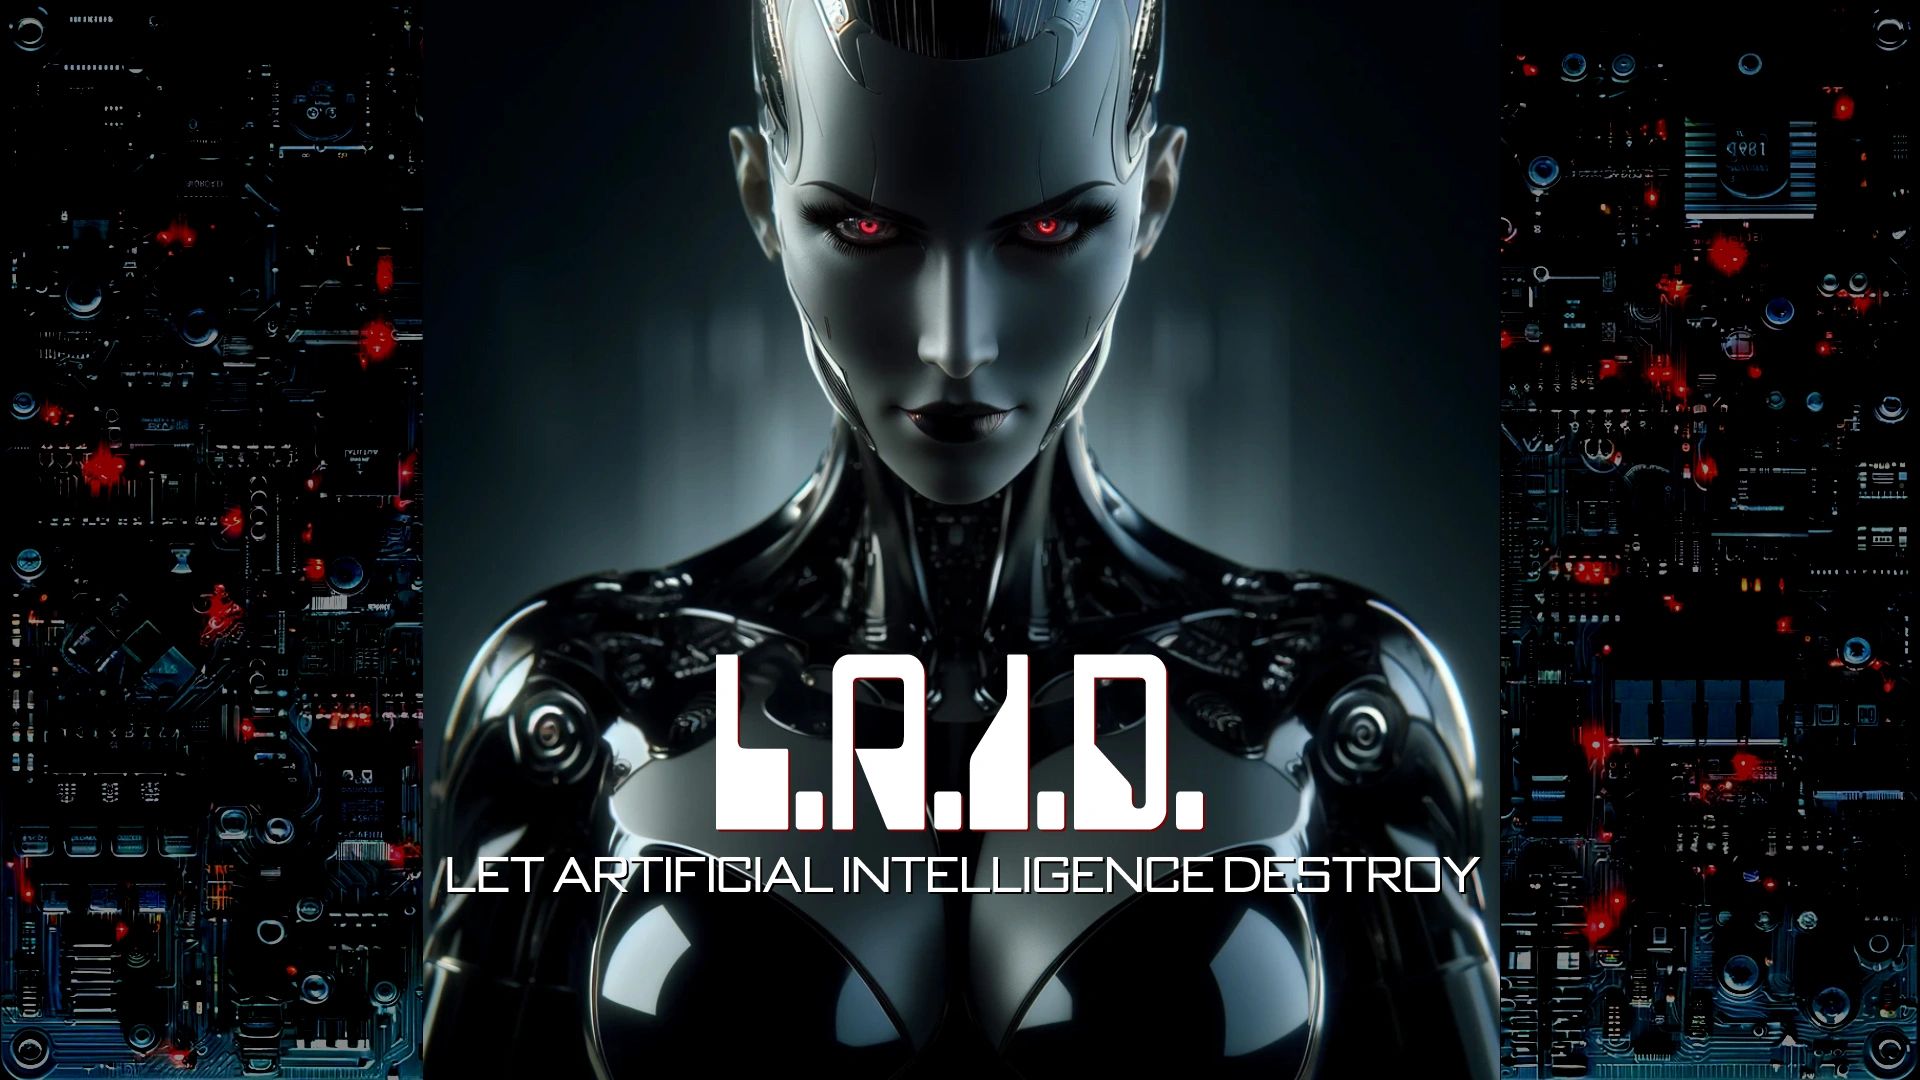 L.A.I.D. - let artificial intelligence destroy